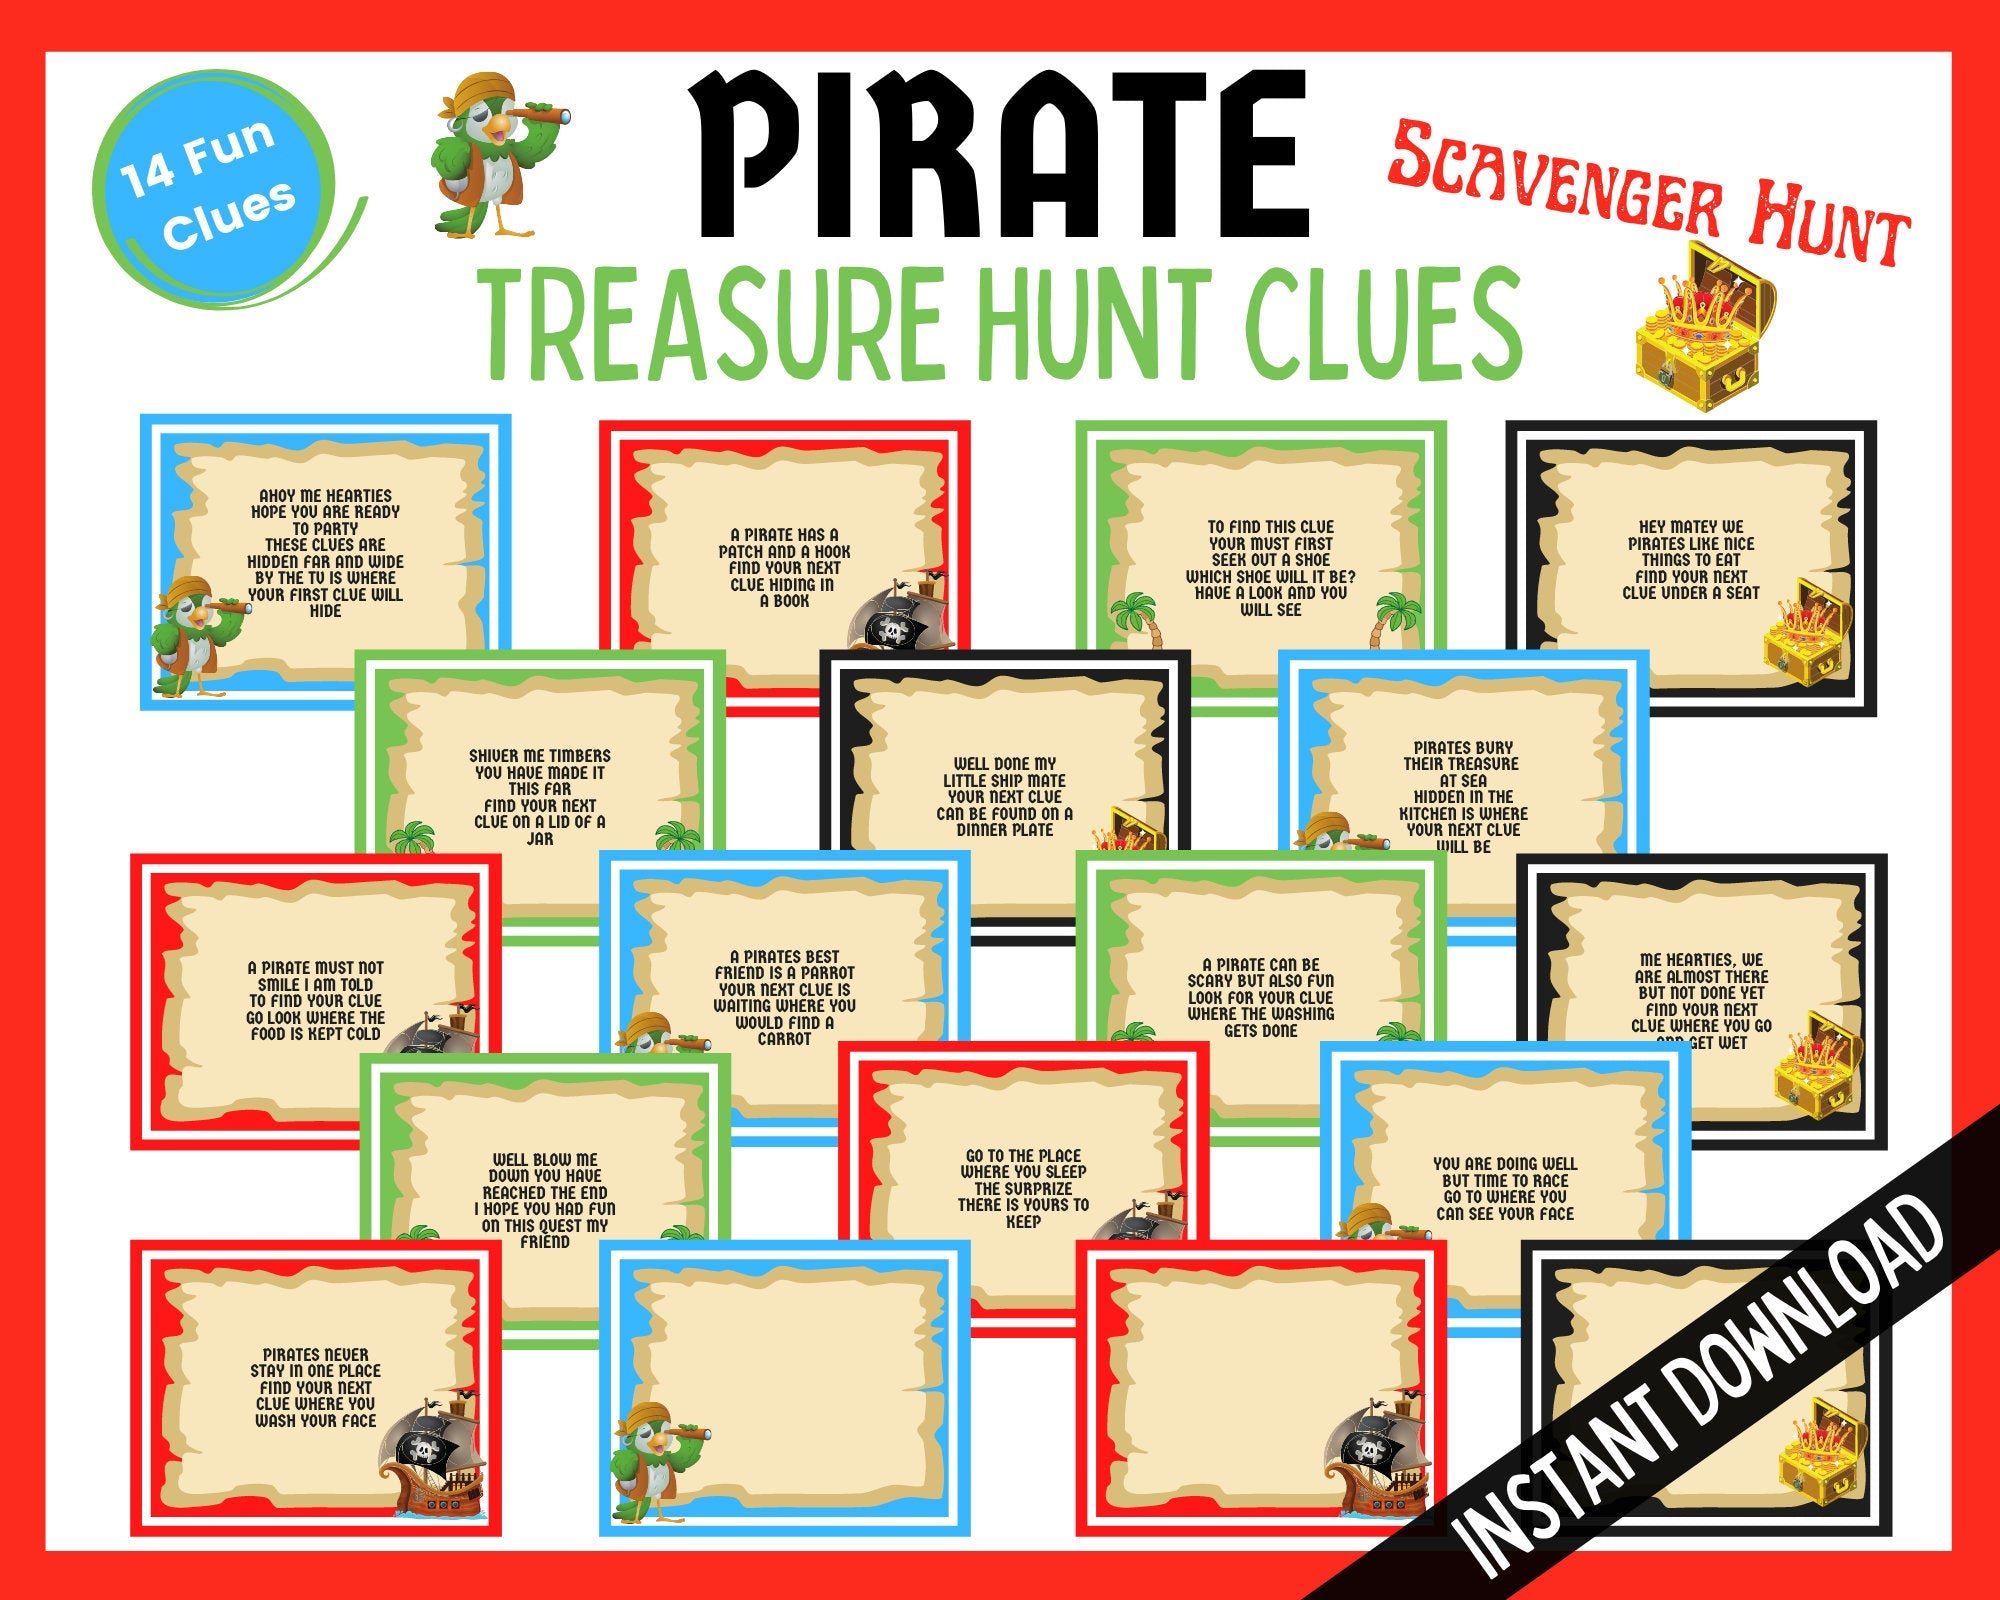 Pirate treasure hunt clues. Scavenger hunt clues. Personalise -   Portugal